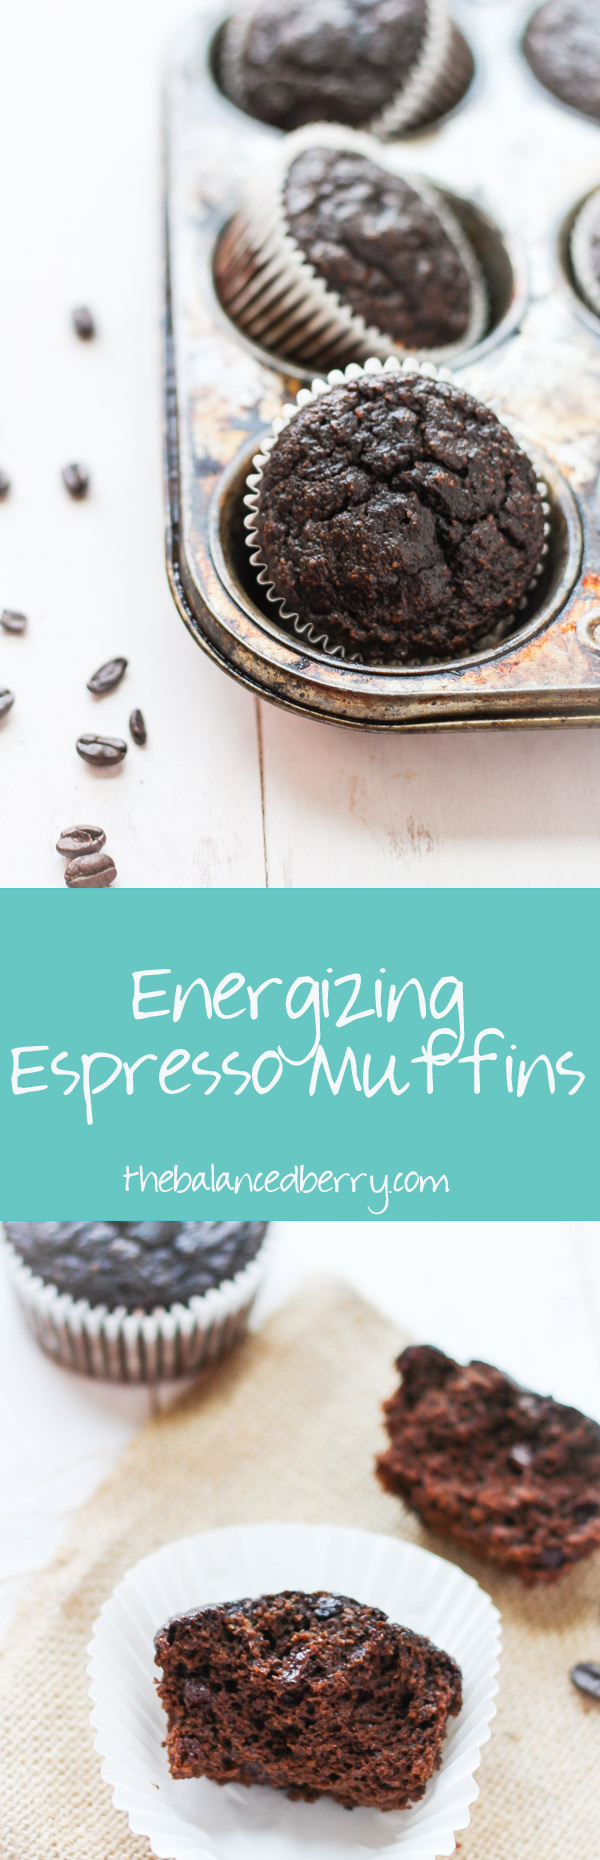 Energizing Espresso Muffins - moist, chocolatey and grain free! via thebalancedberry.com